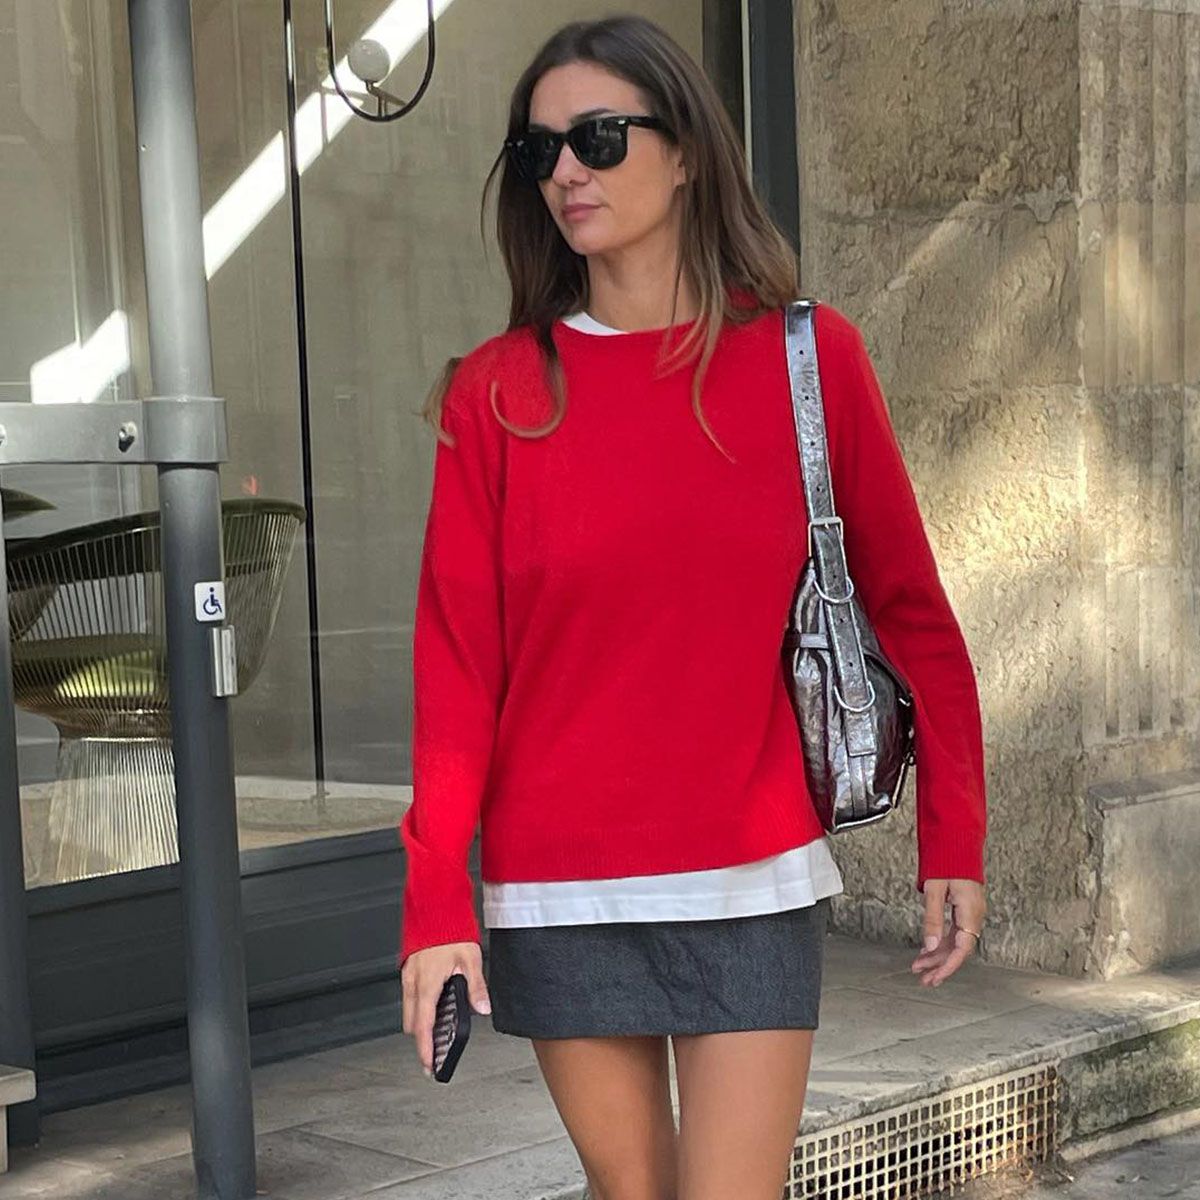 Miniskirts Are Trending in Paris—6 Fresh Ways to Wear Them